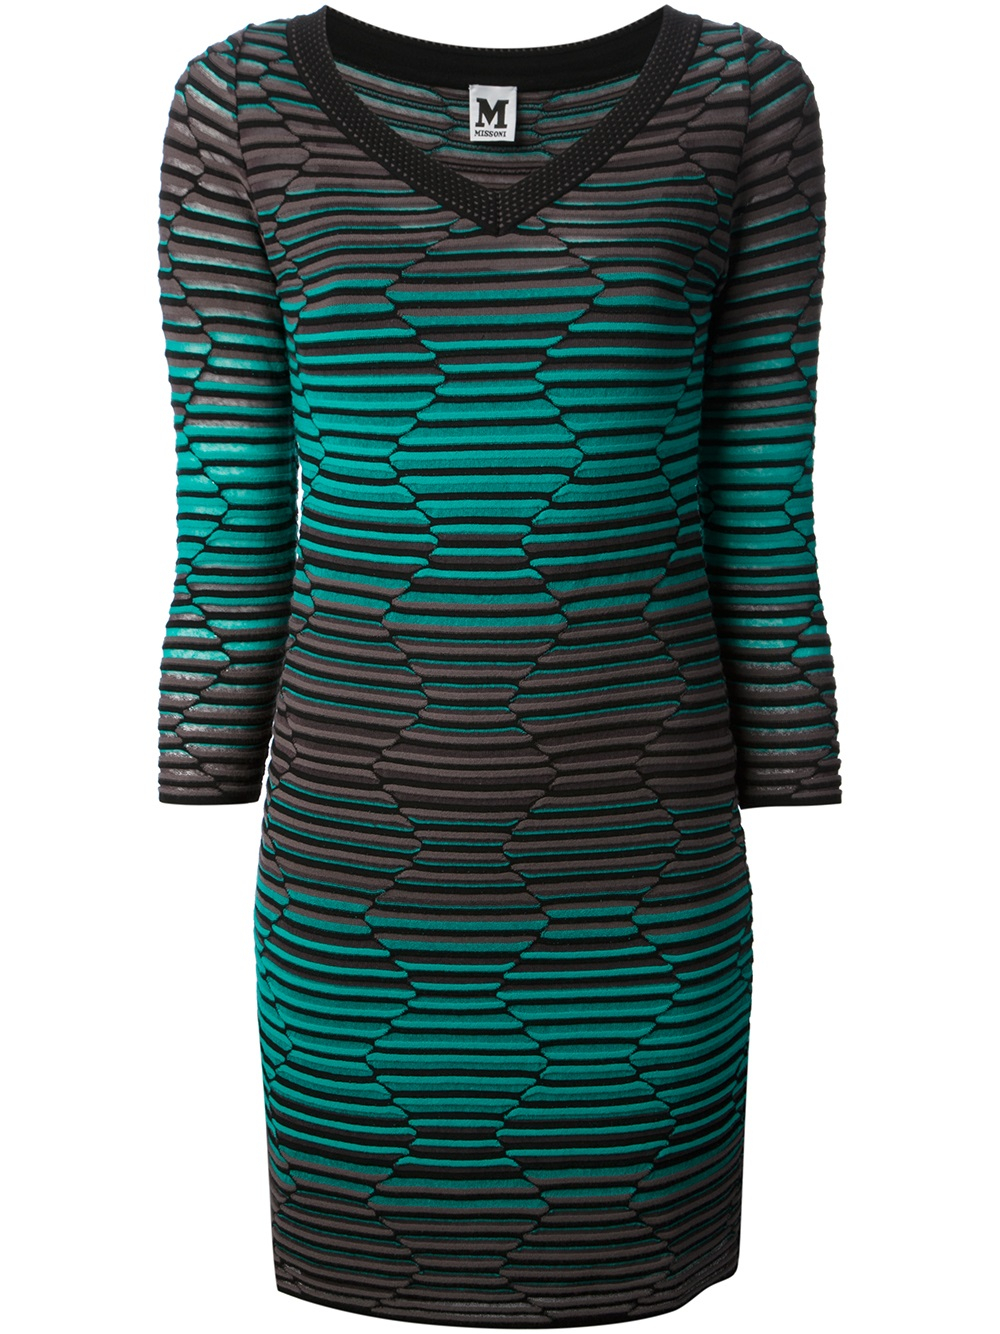 m missoni green striped knit dress product 1 16814982 2 878798657 normal